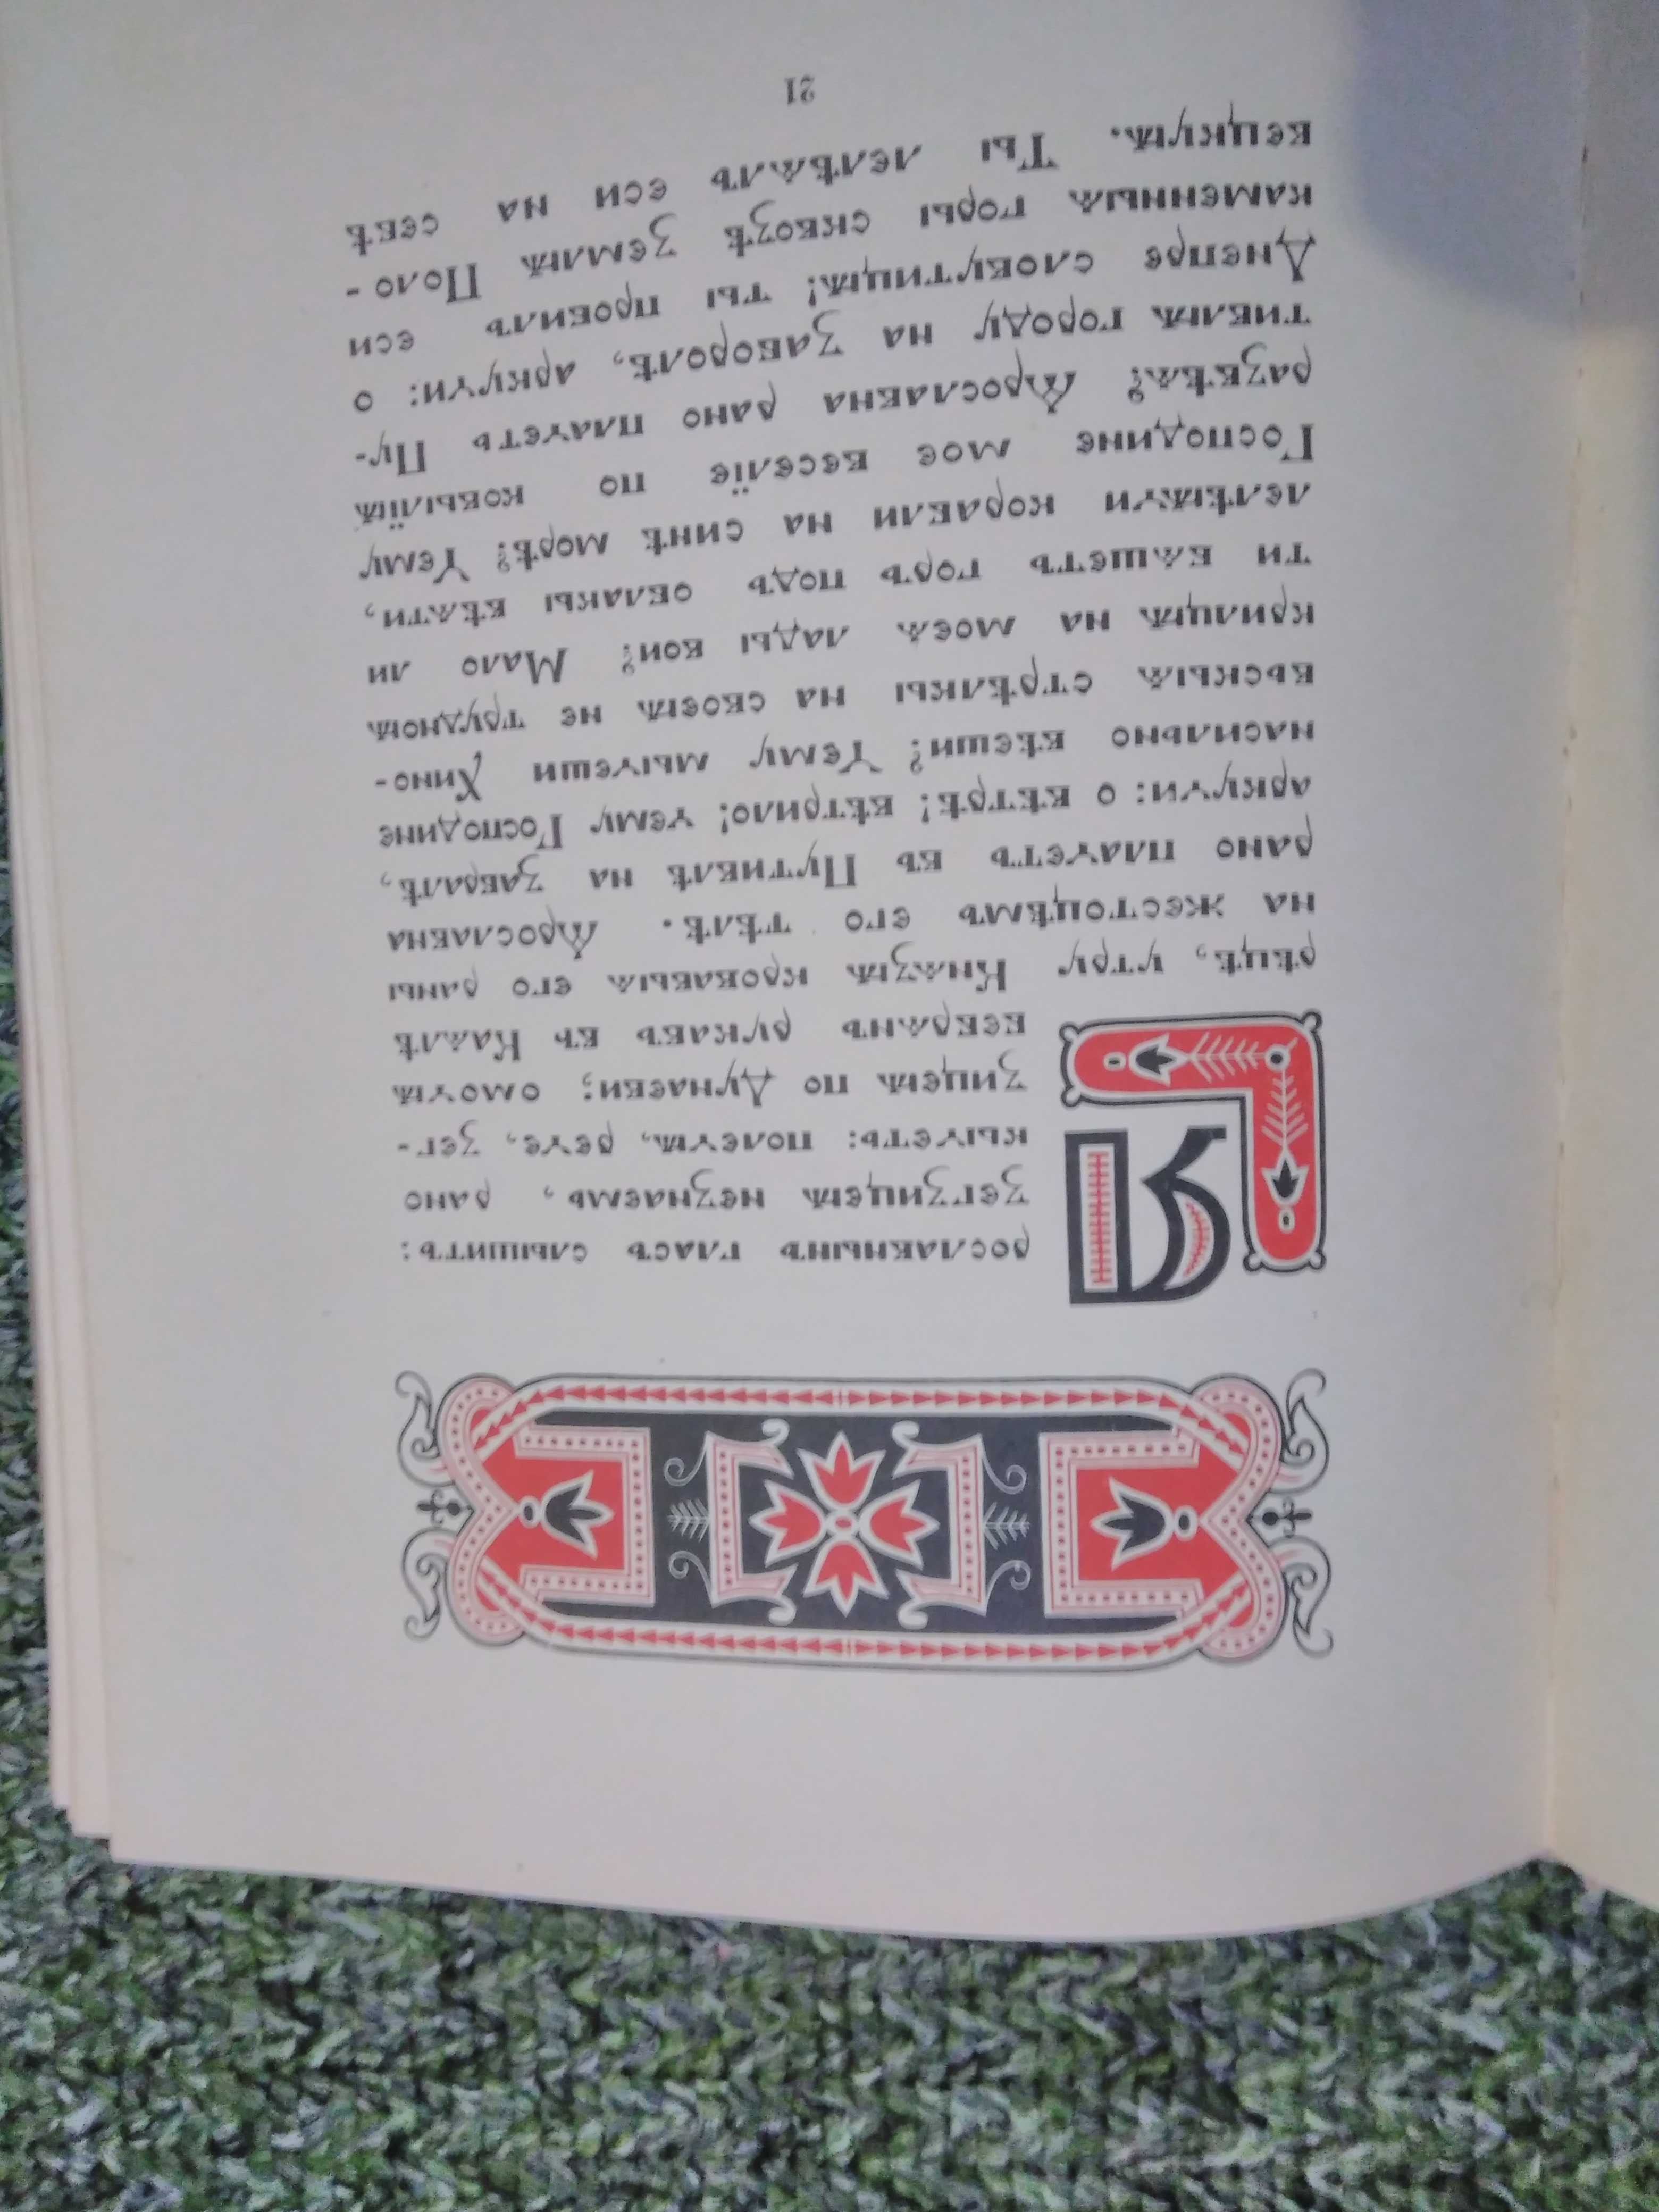 Книга "Слово о полку Игореве". 1959год.